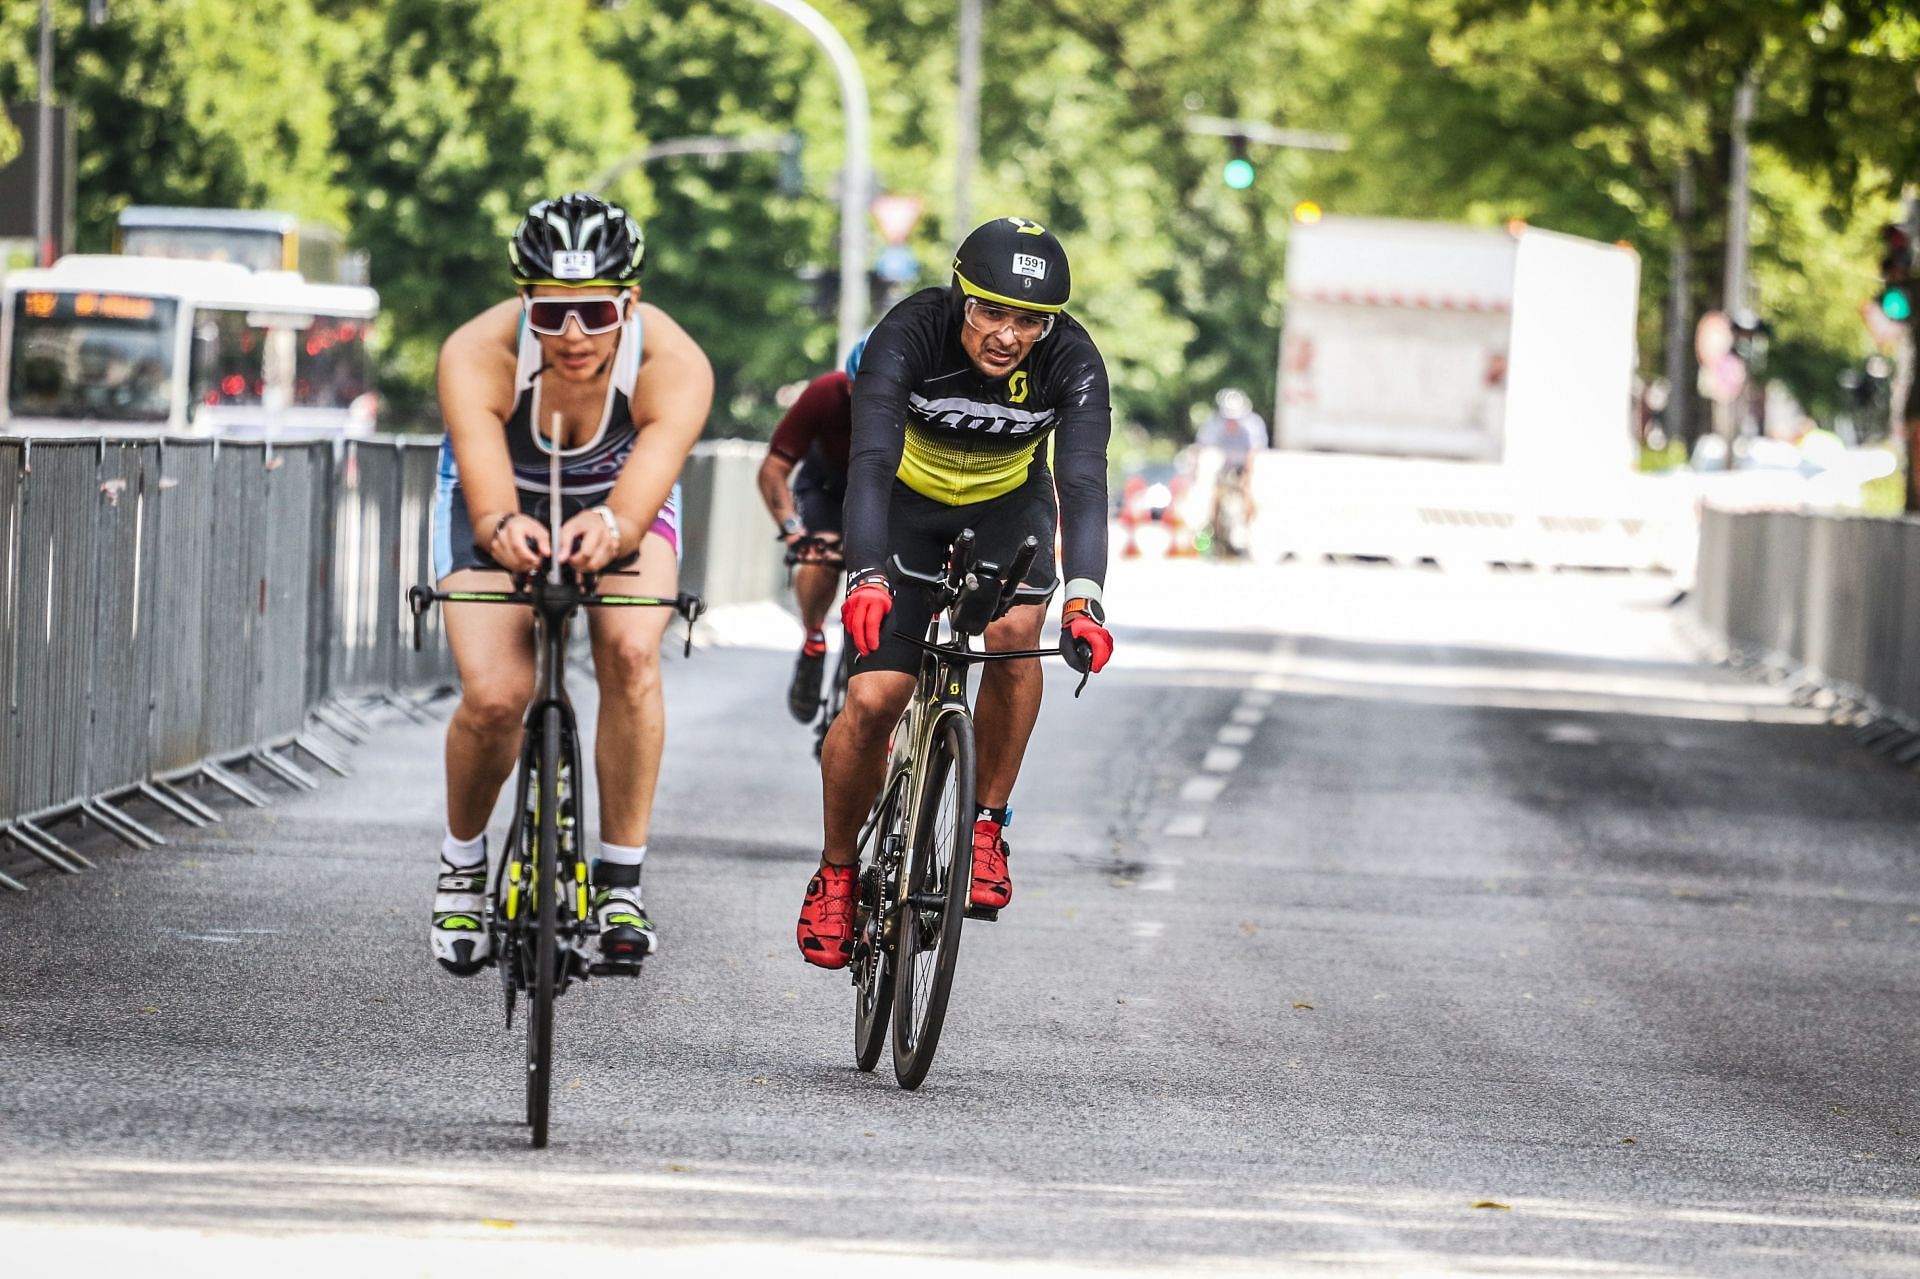 Amit Samarth during his cycling leg in Germany. (Pic credit: Amit Samarth)